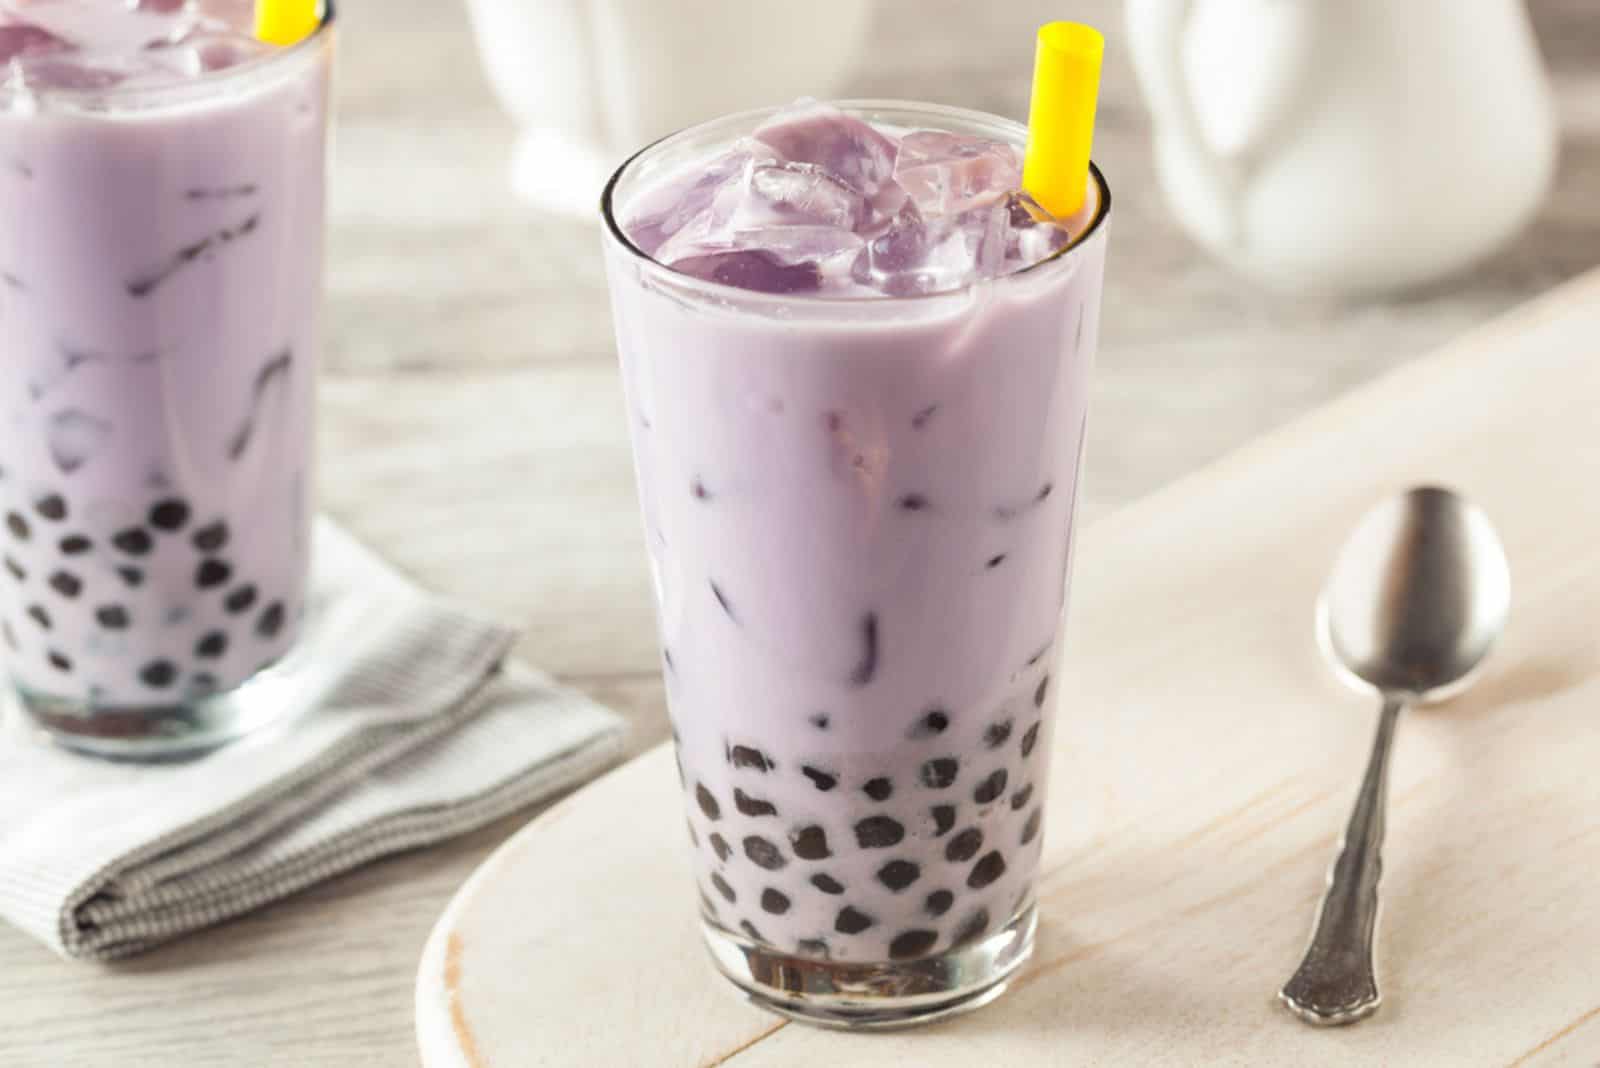 Homemade Taro Milk Bubble Tea with Tapioca Pearls
